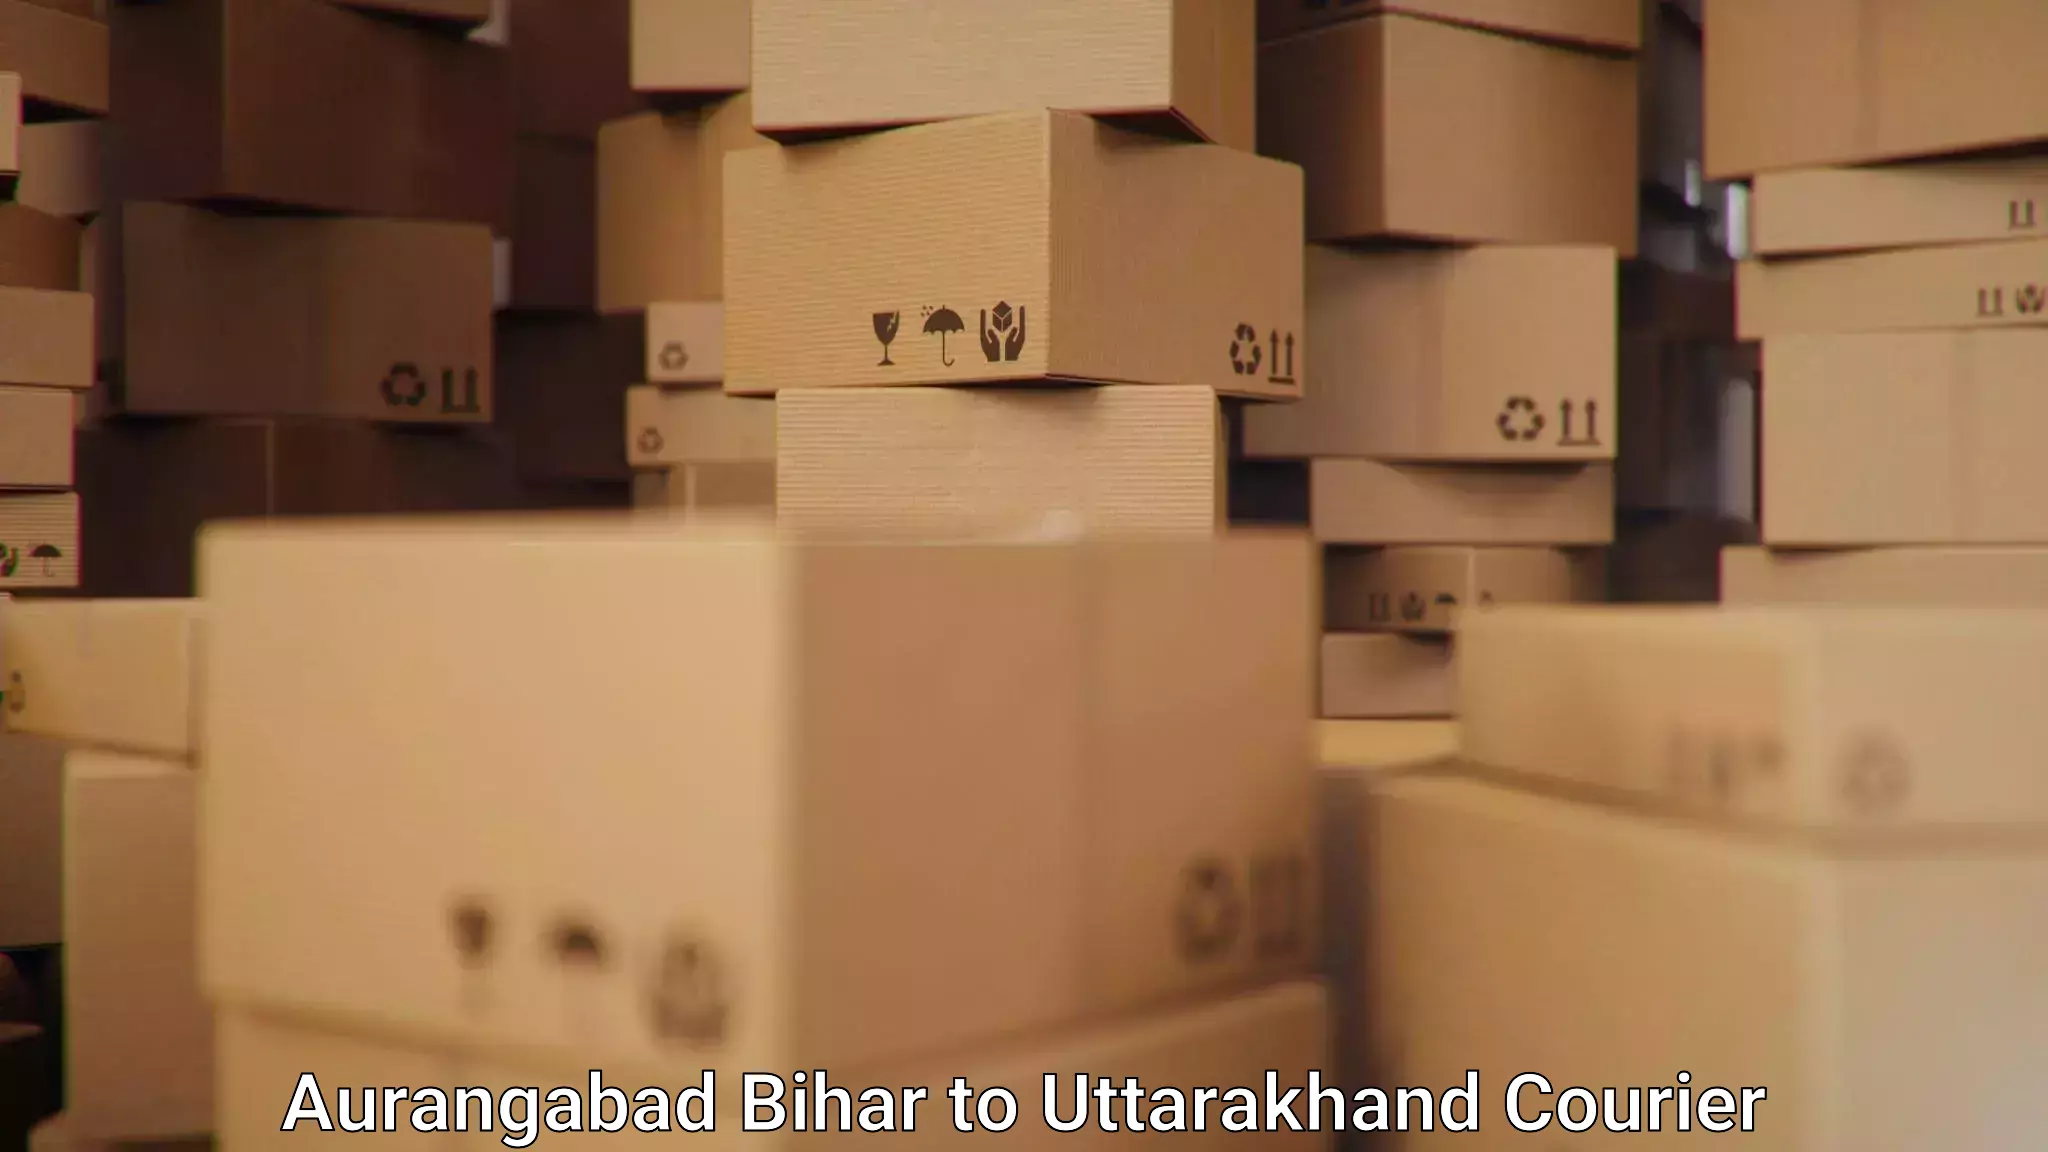 Urgent courier needs Aurangabad Bihar to Uttarakhand